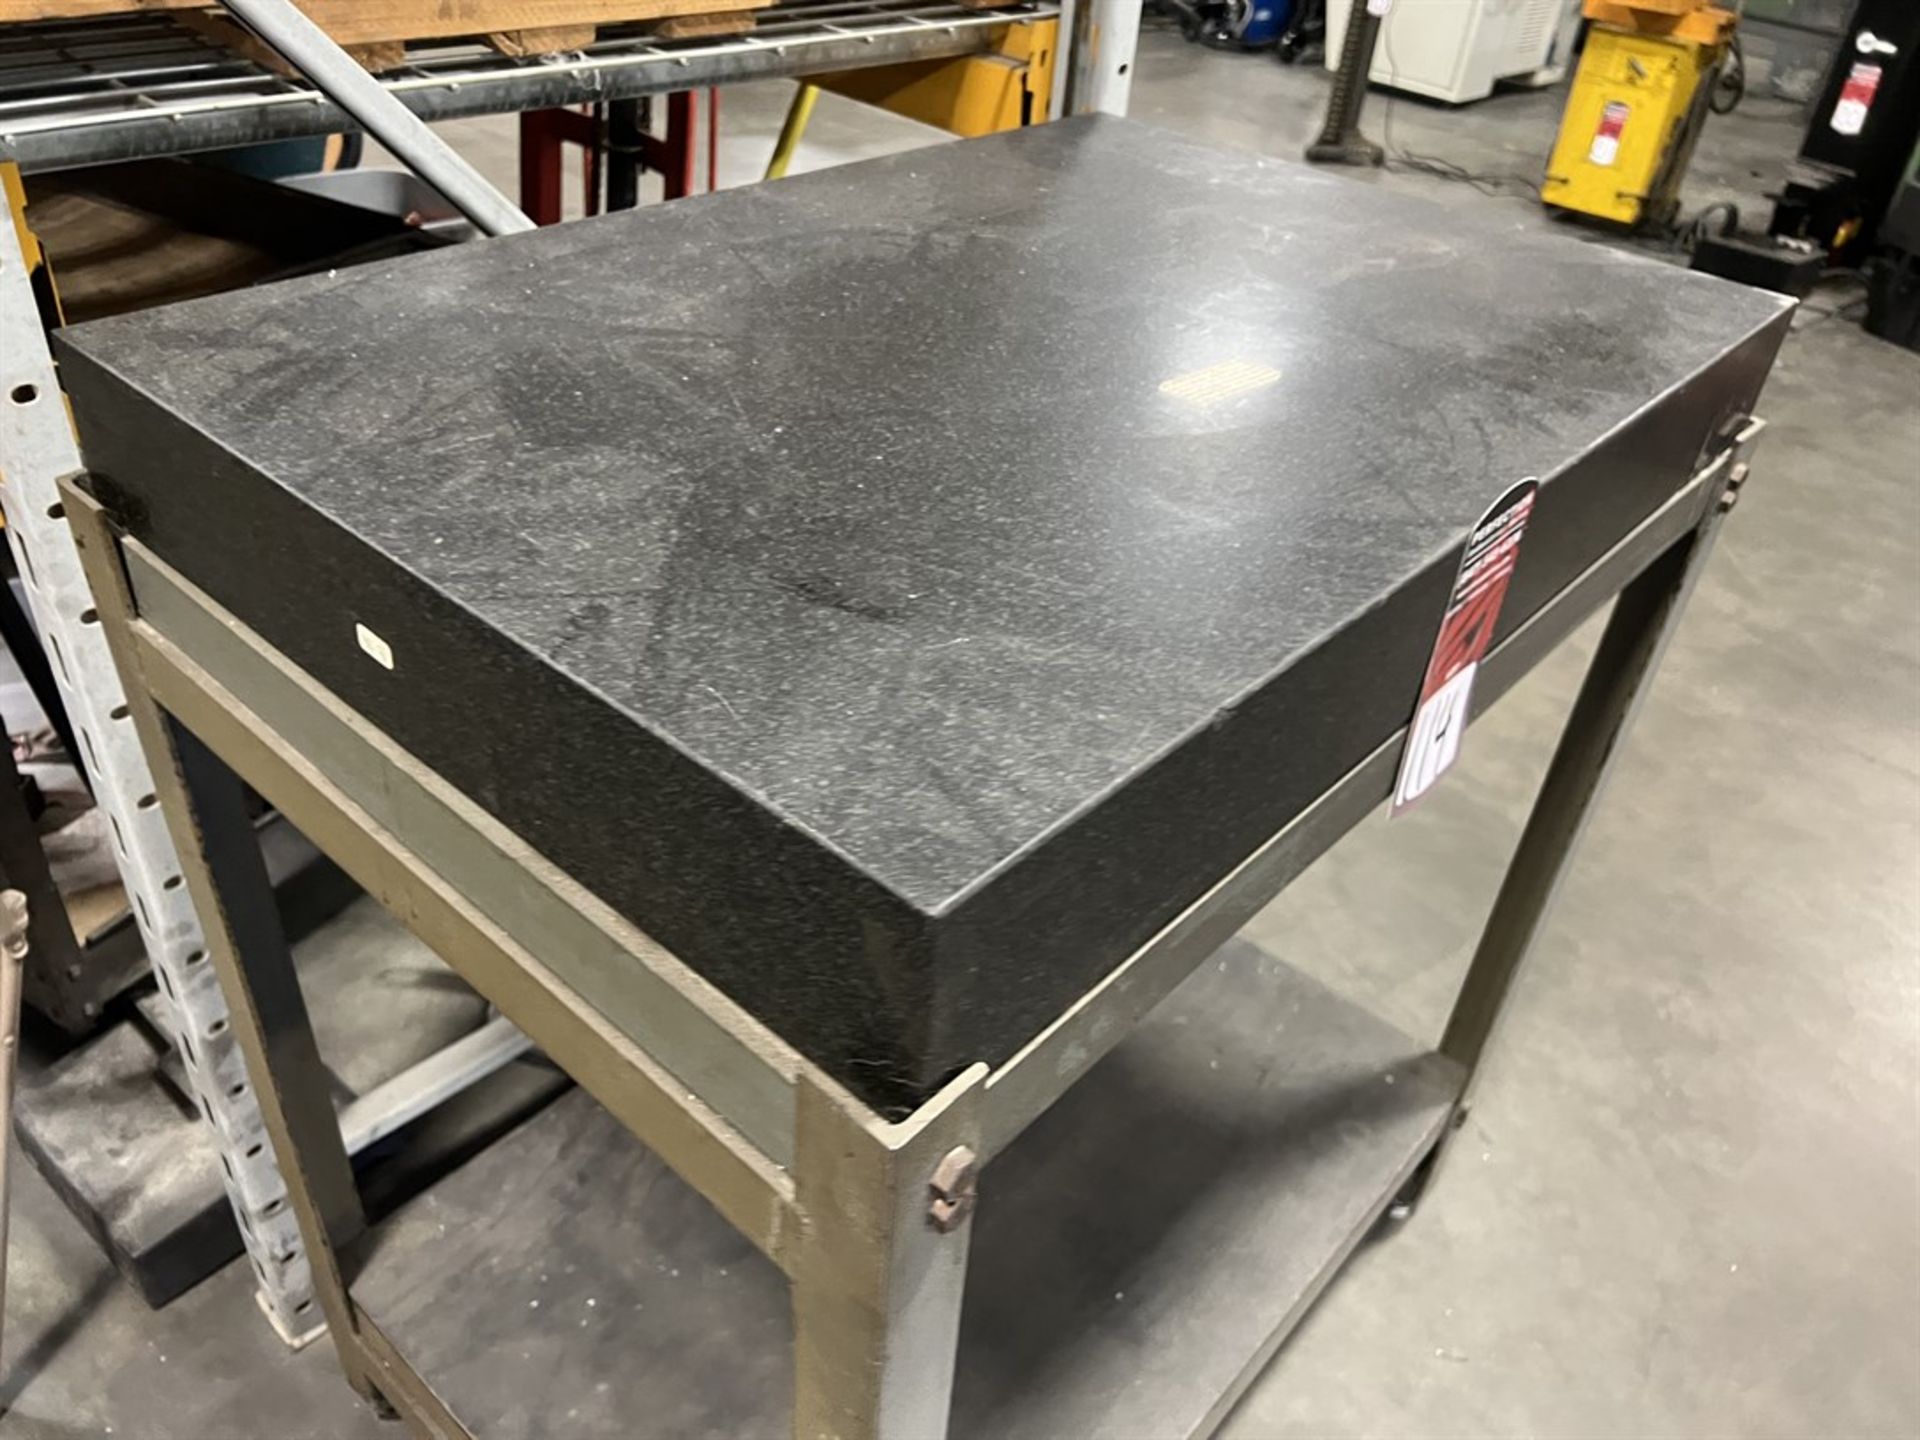 Black Granite Surface Plate, 24" x 36" x 4", on Steel Base - Image 3 of 3